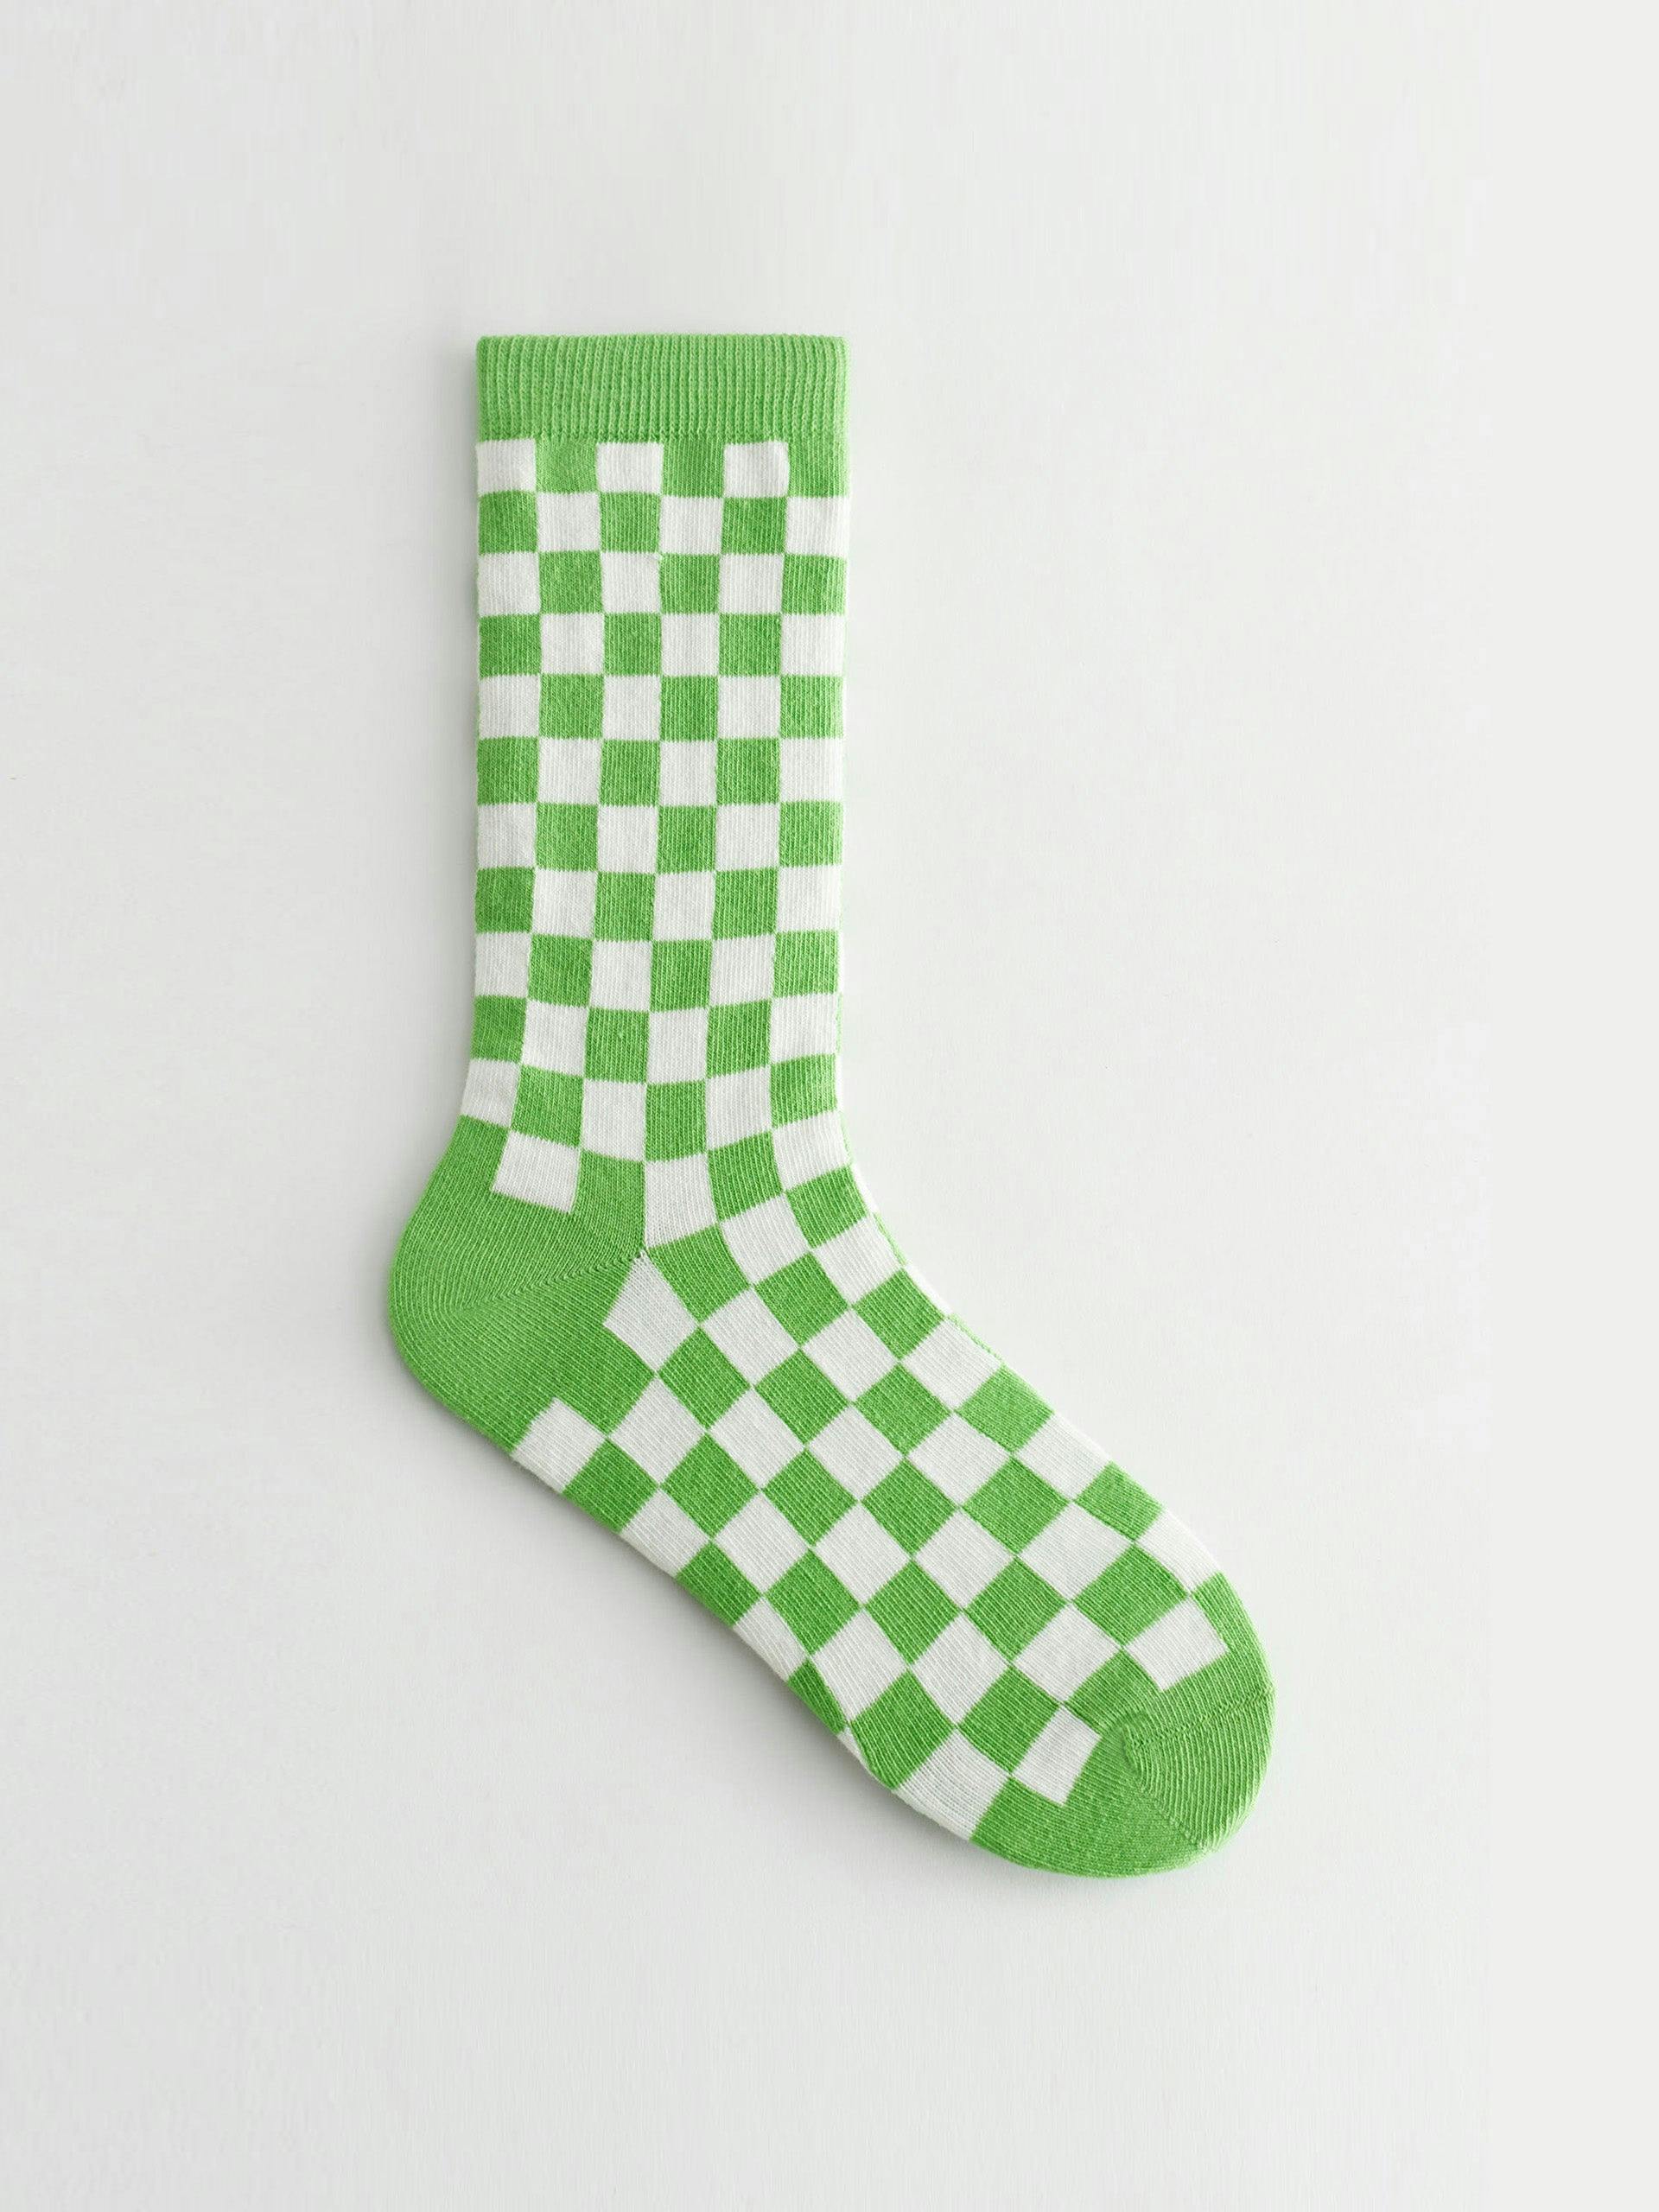 Green and white checkered socks